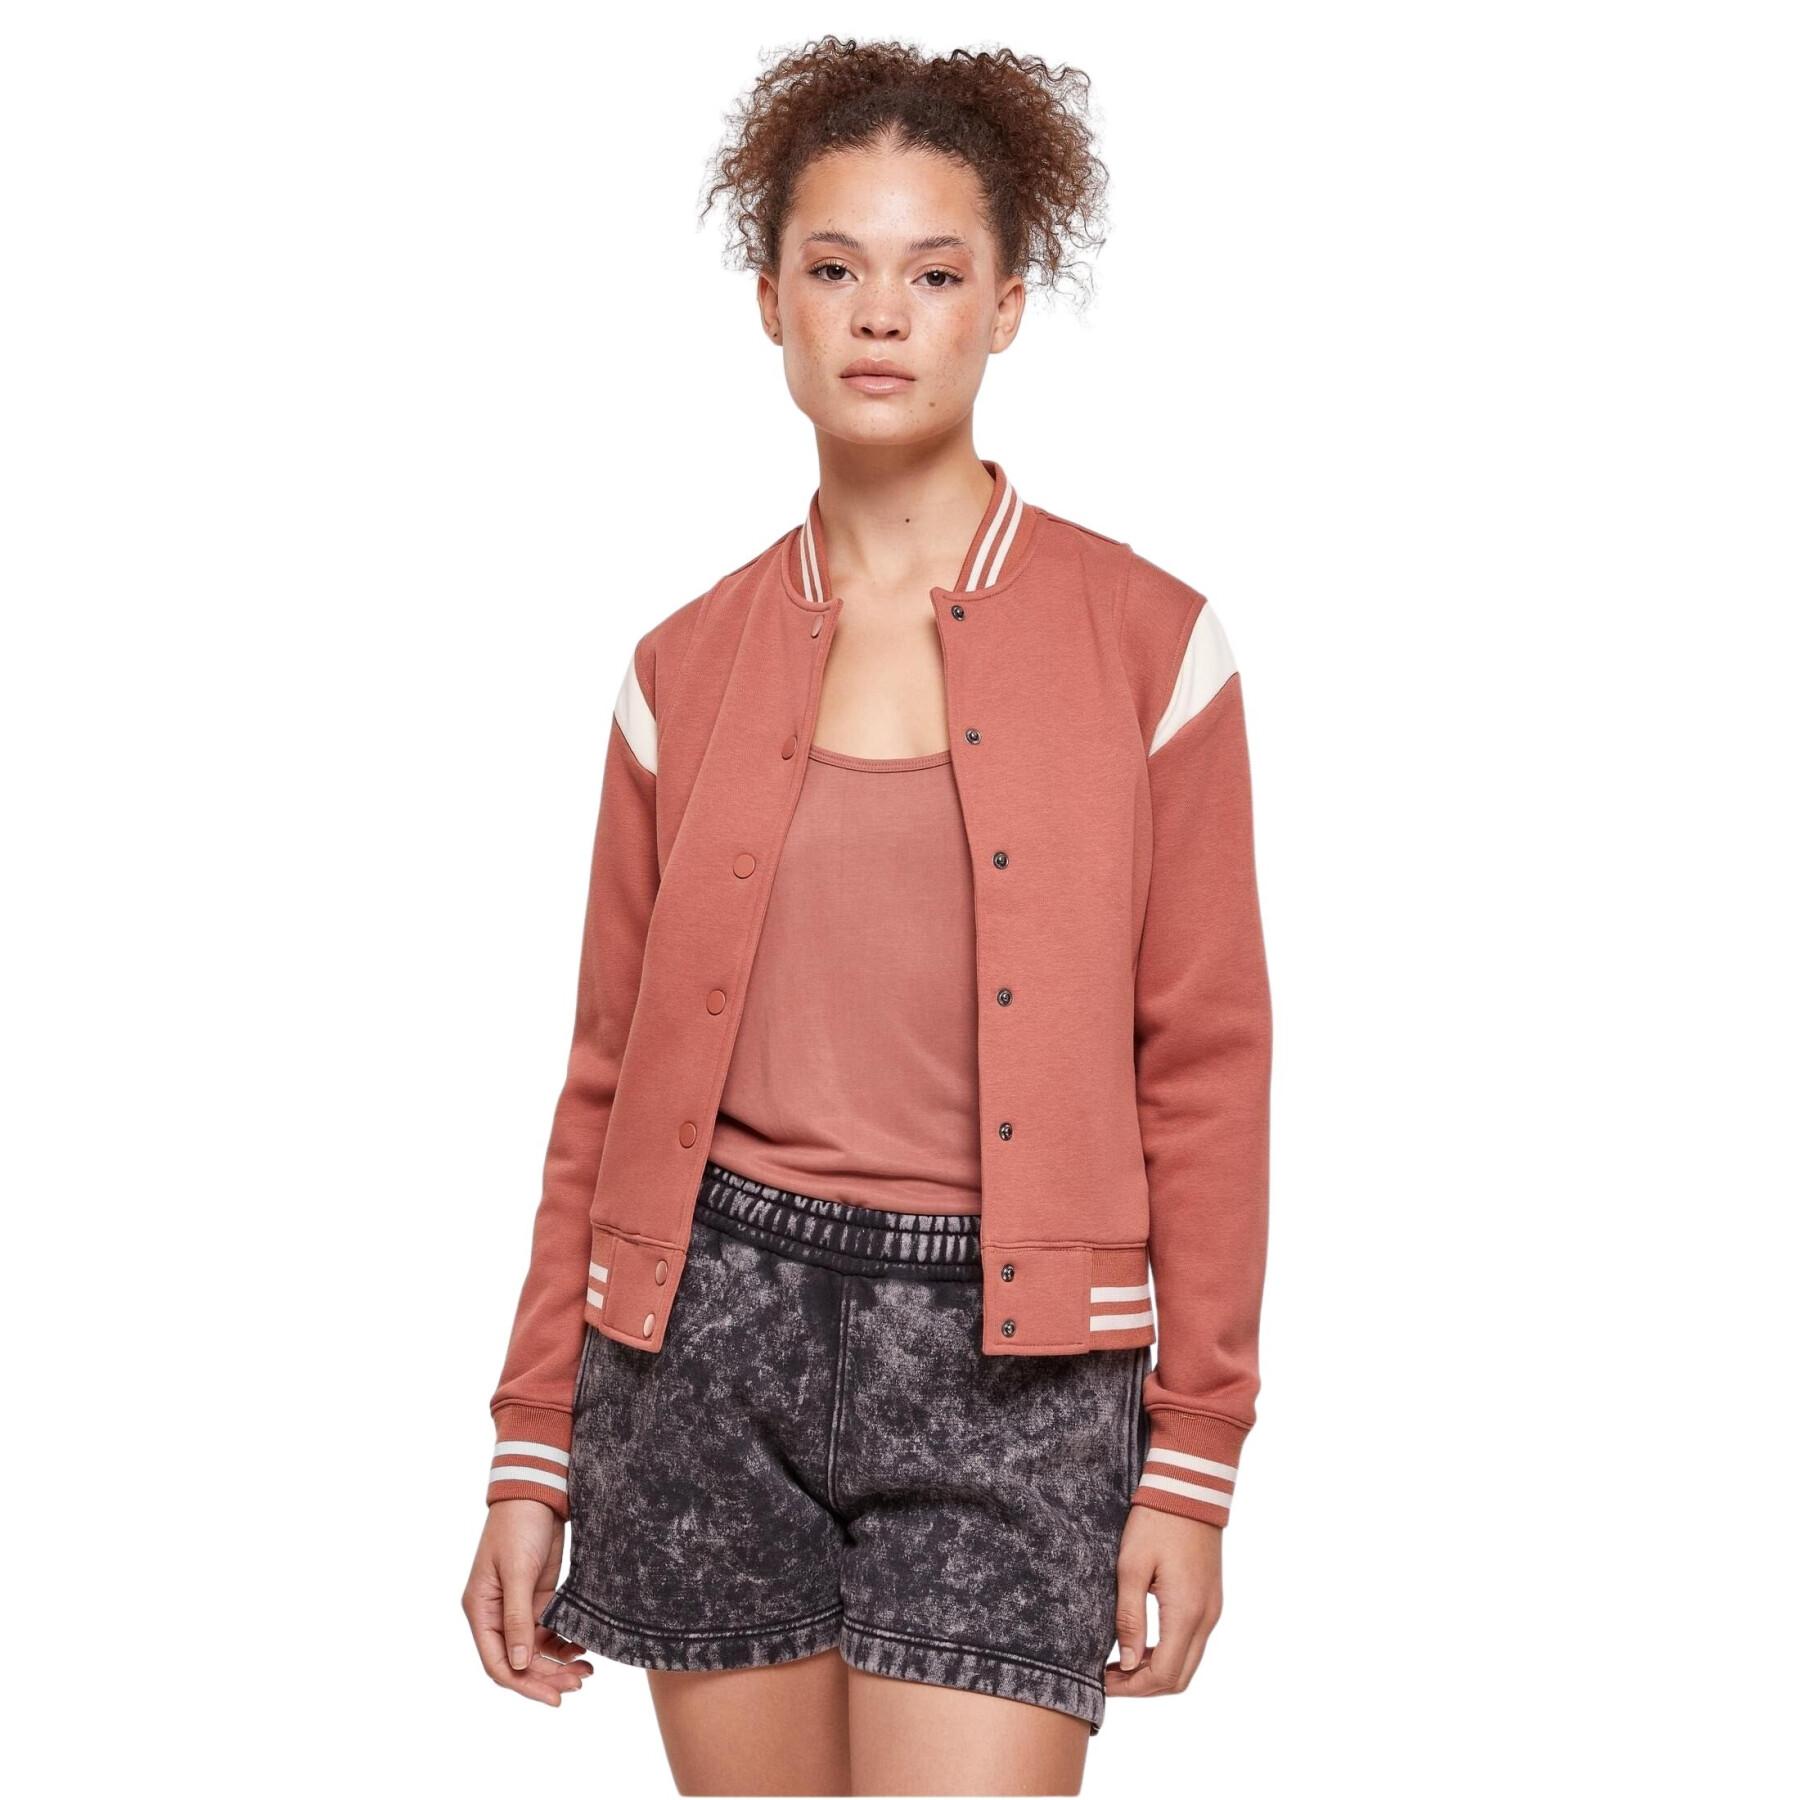 College Urban Inset Clothing Classics Classics - jacket sweat Women\'s Urban - Women\'s